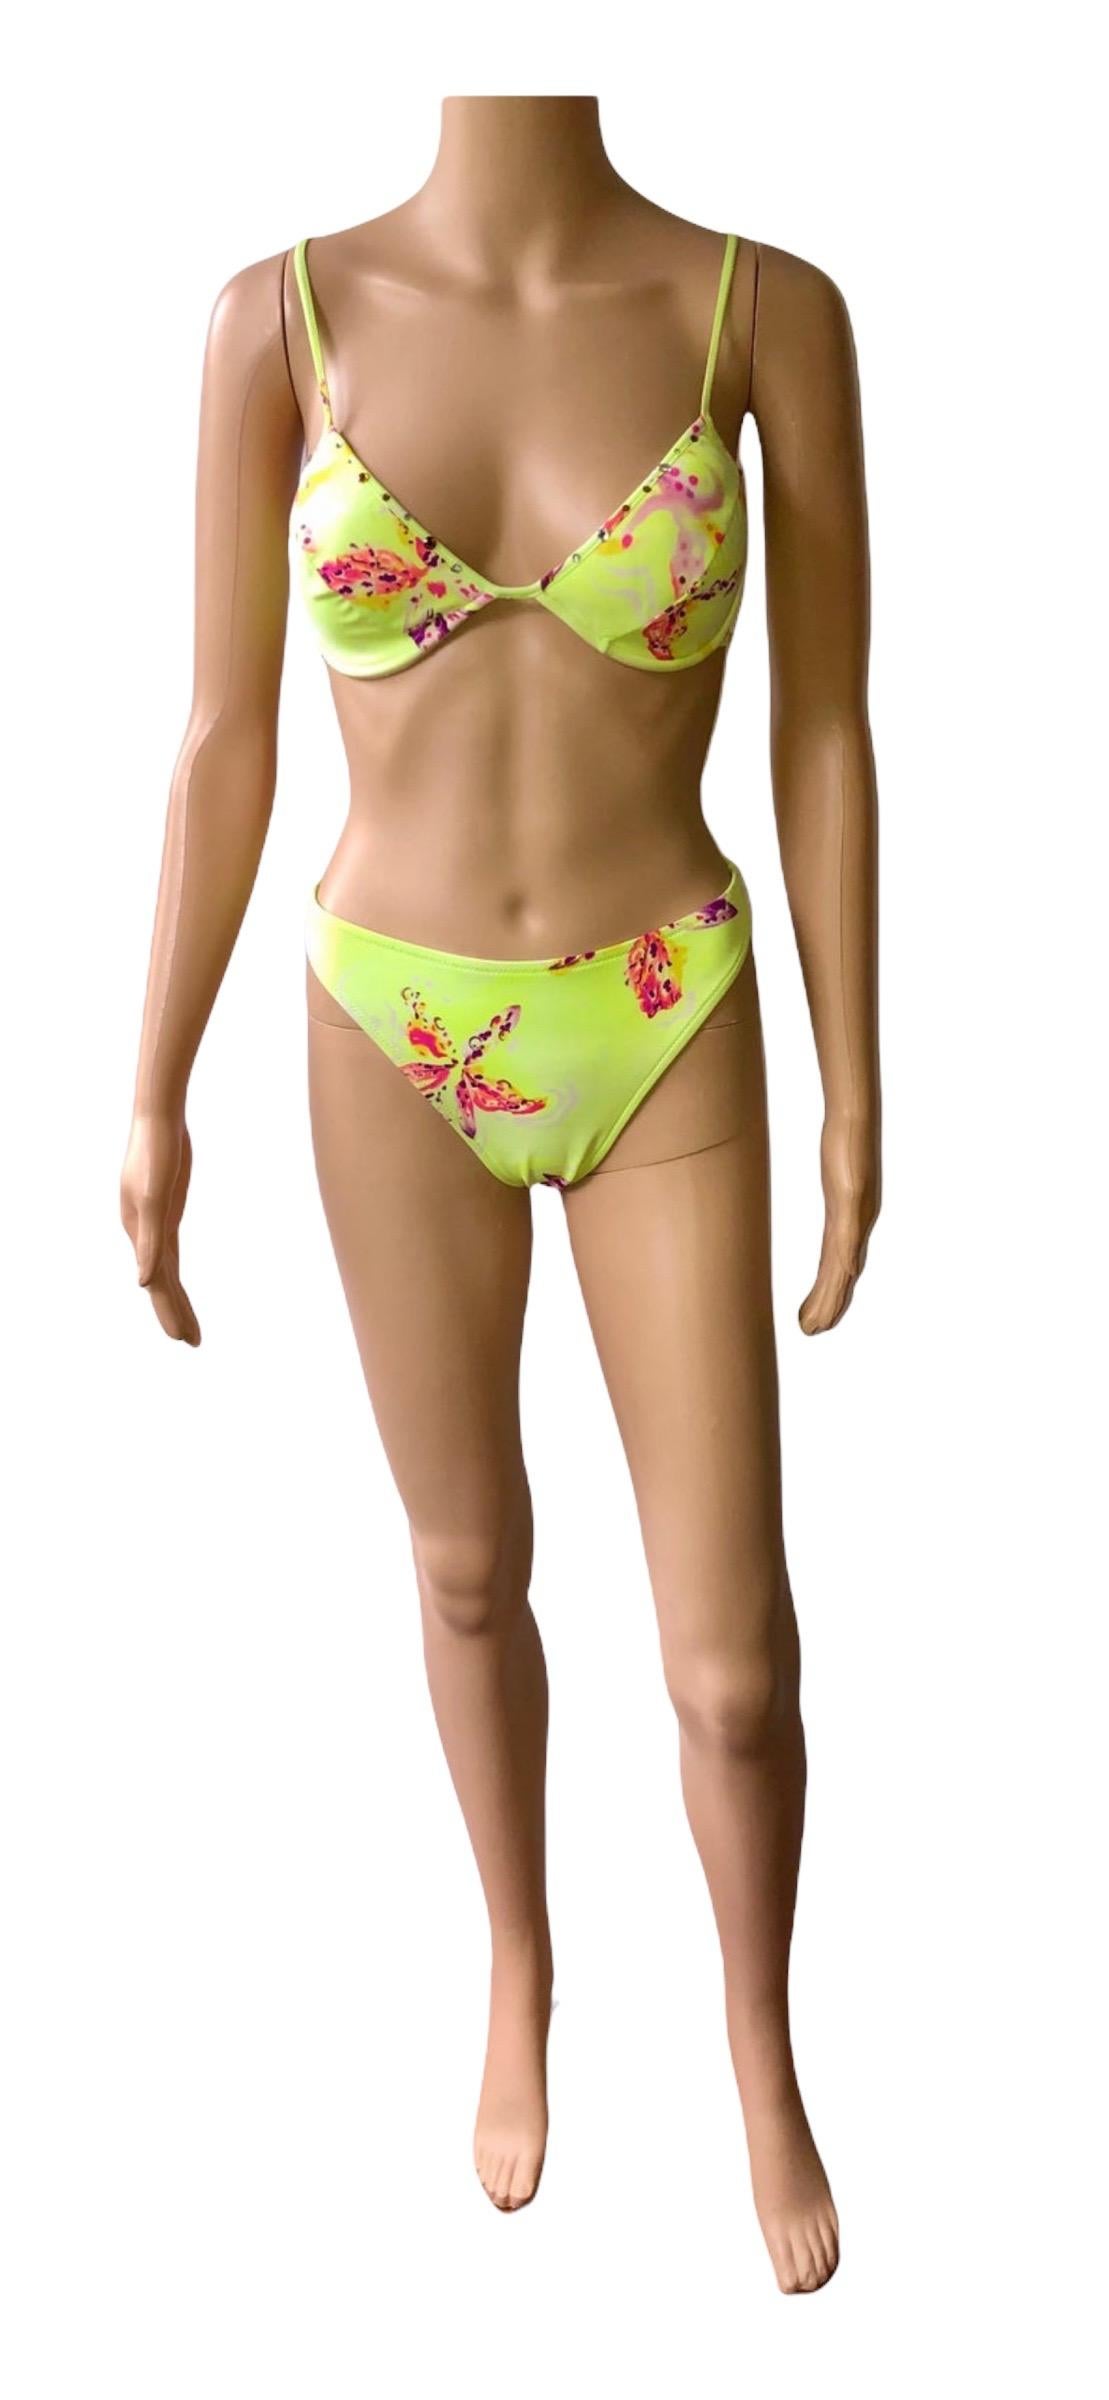 Gianni Versace S/S 2000 Orchid Neon Two-Piece Bikini Set Swimsuit Swimwear  For Sale 2